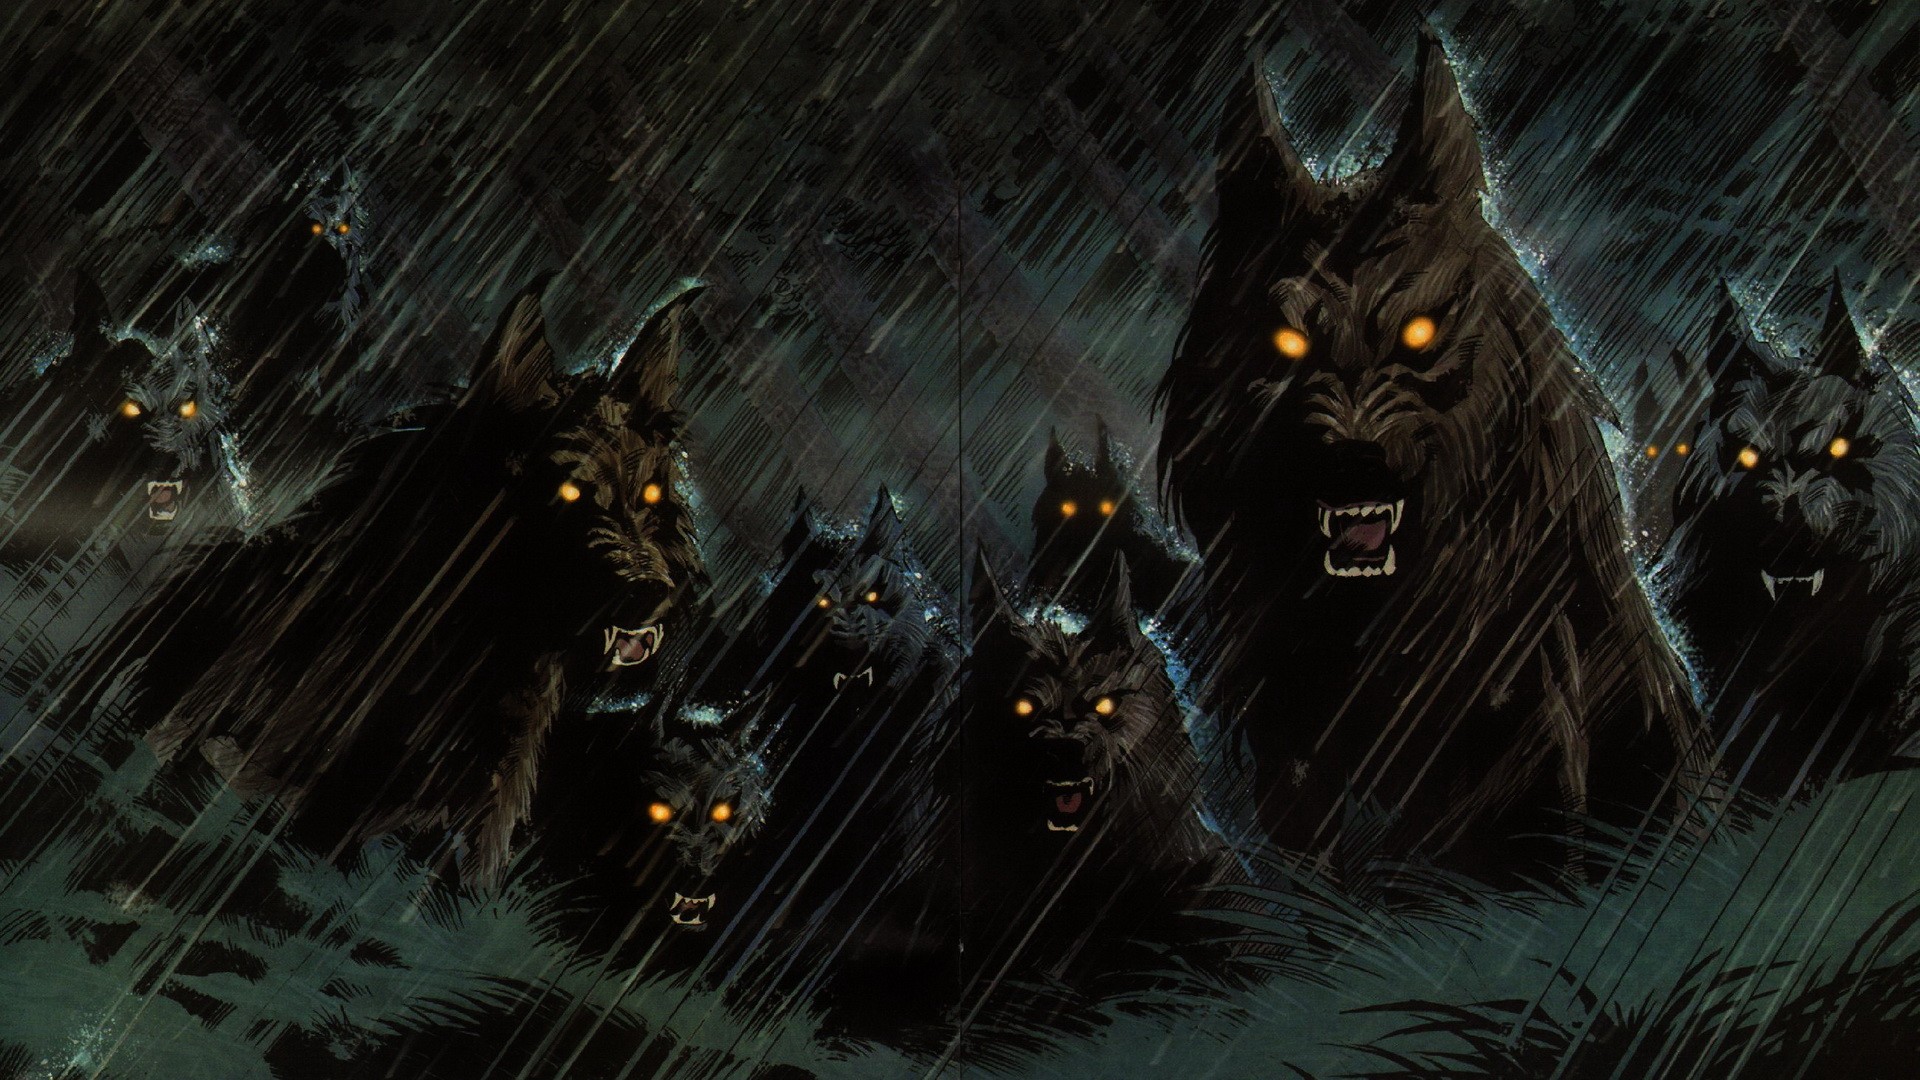 Demons Evil Fantasy Predator Horror Creepy Spooky Storm Rain Halloween